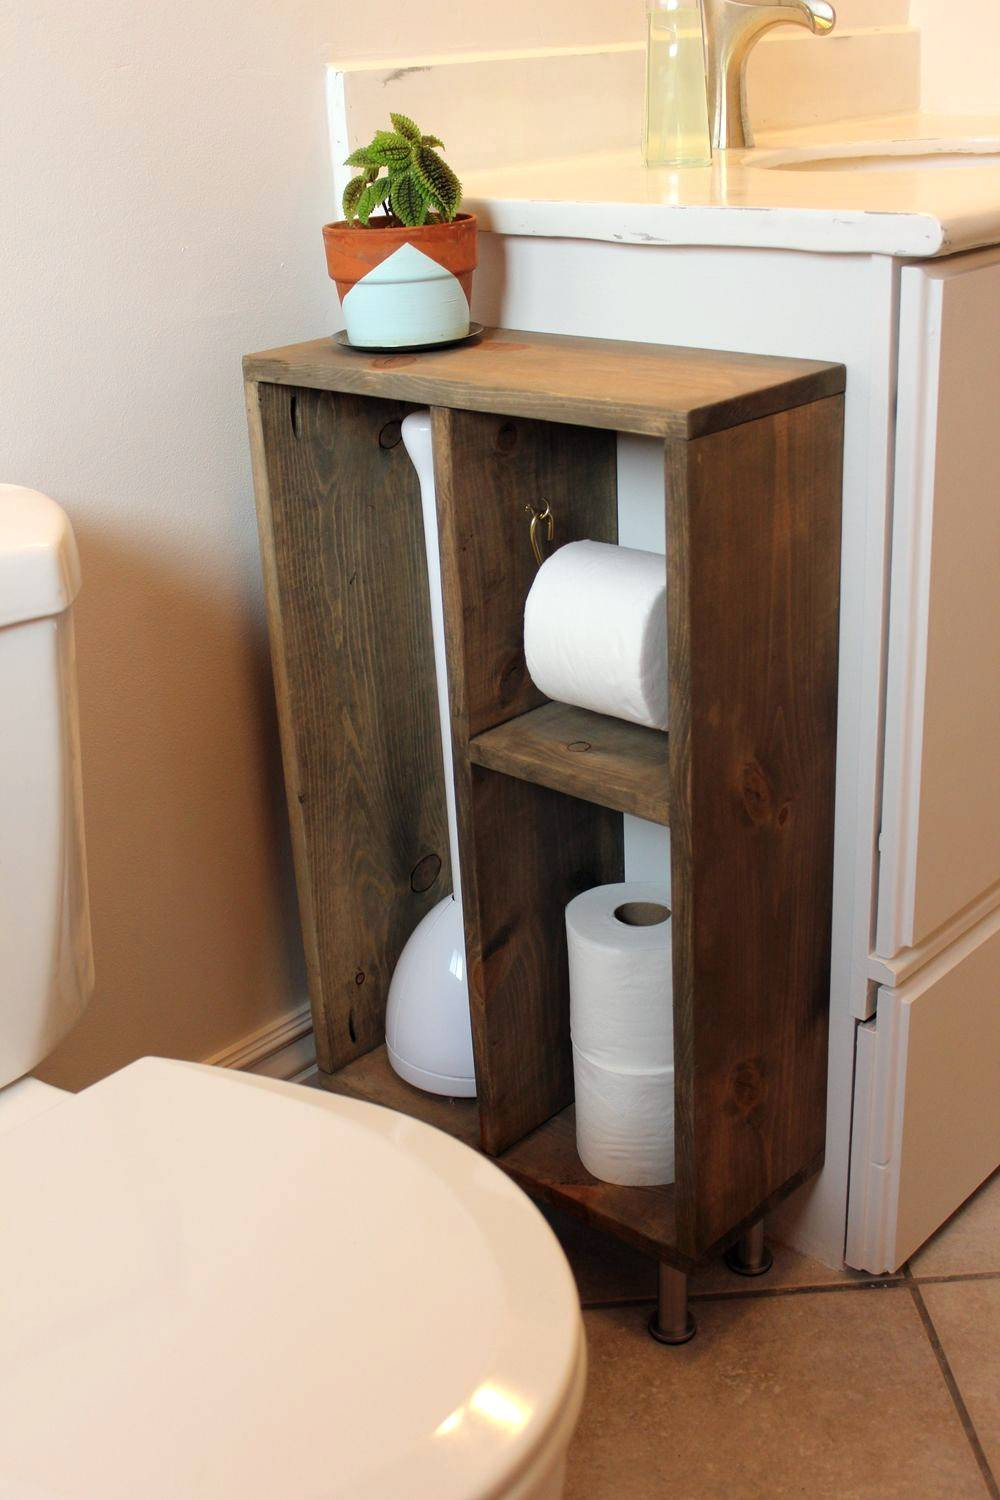 Storage Ideas For Bathroom
 Boosting Your Bathroom Storage Capacity with DIY Shelving